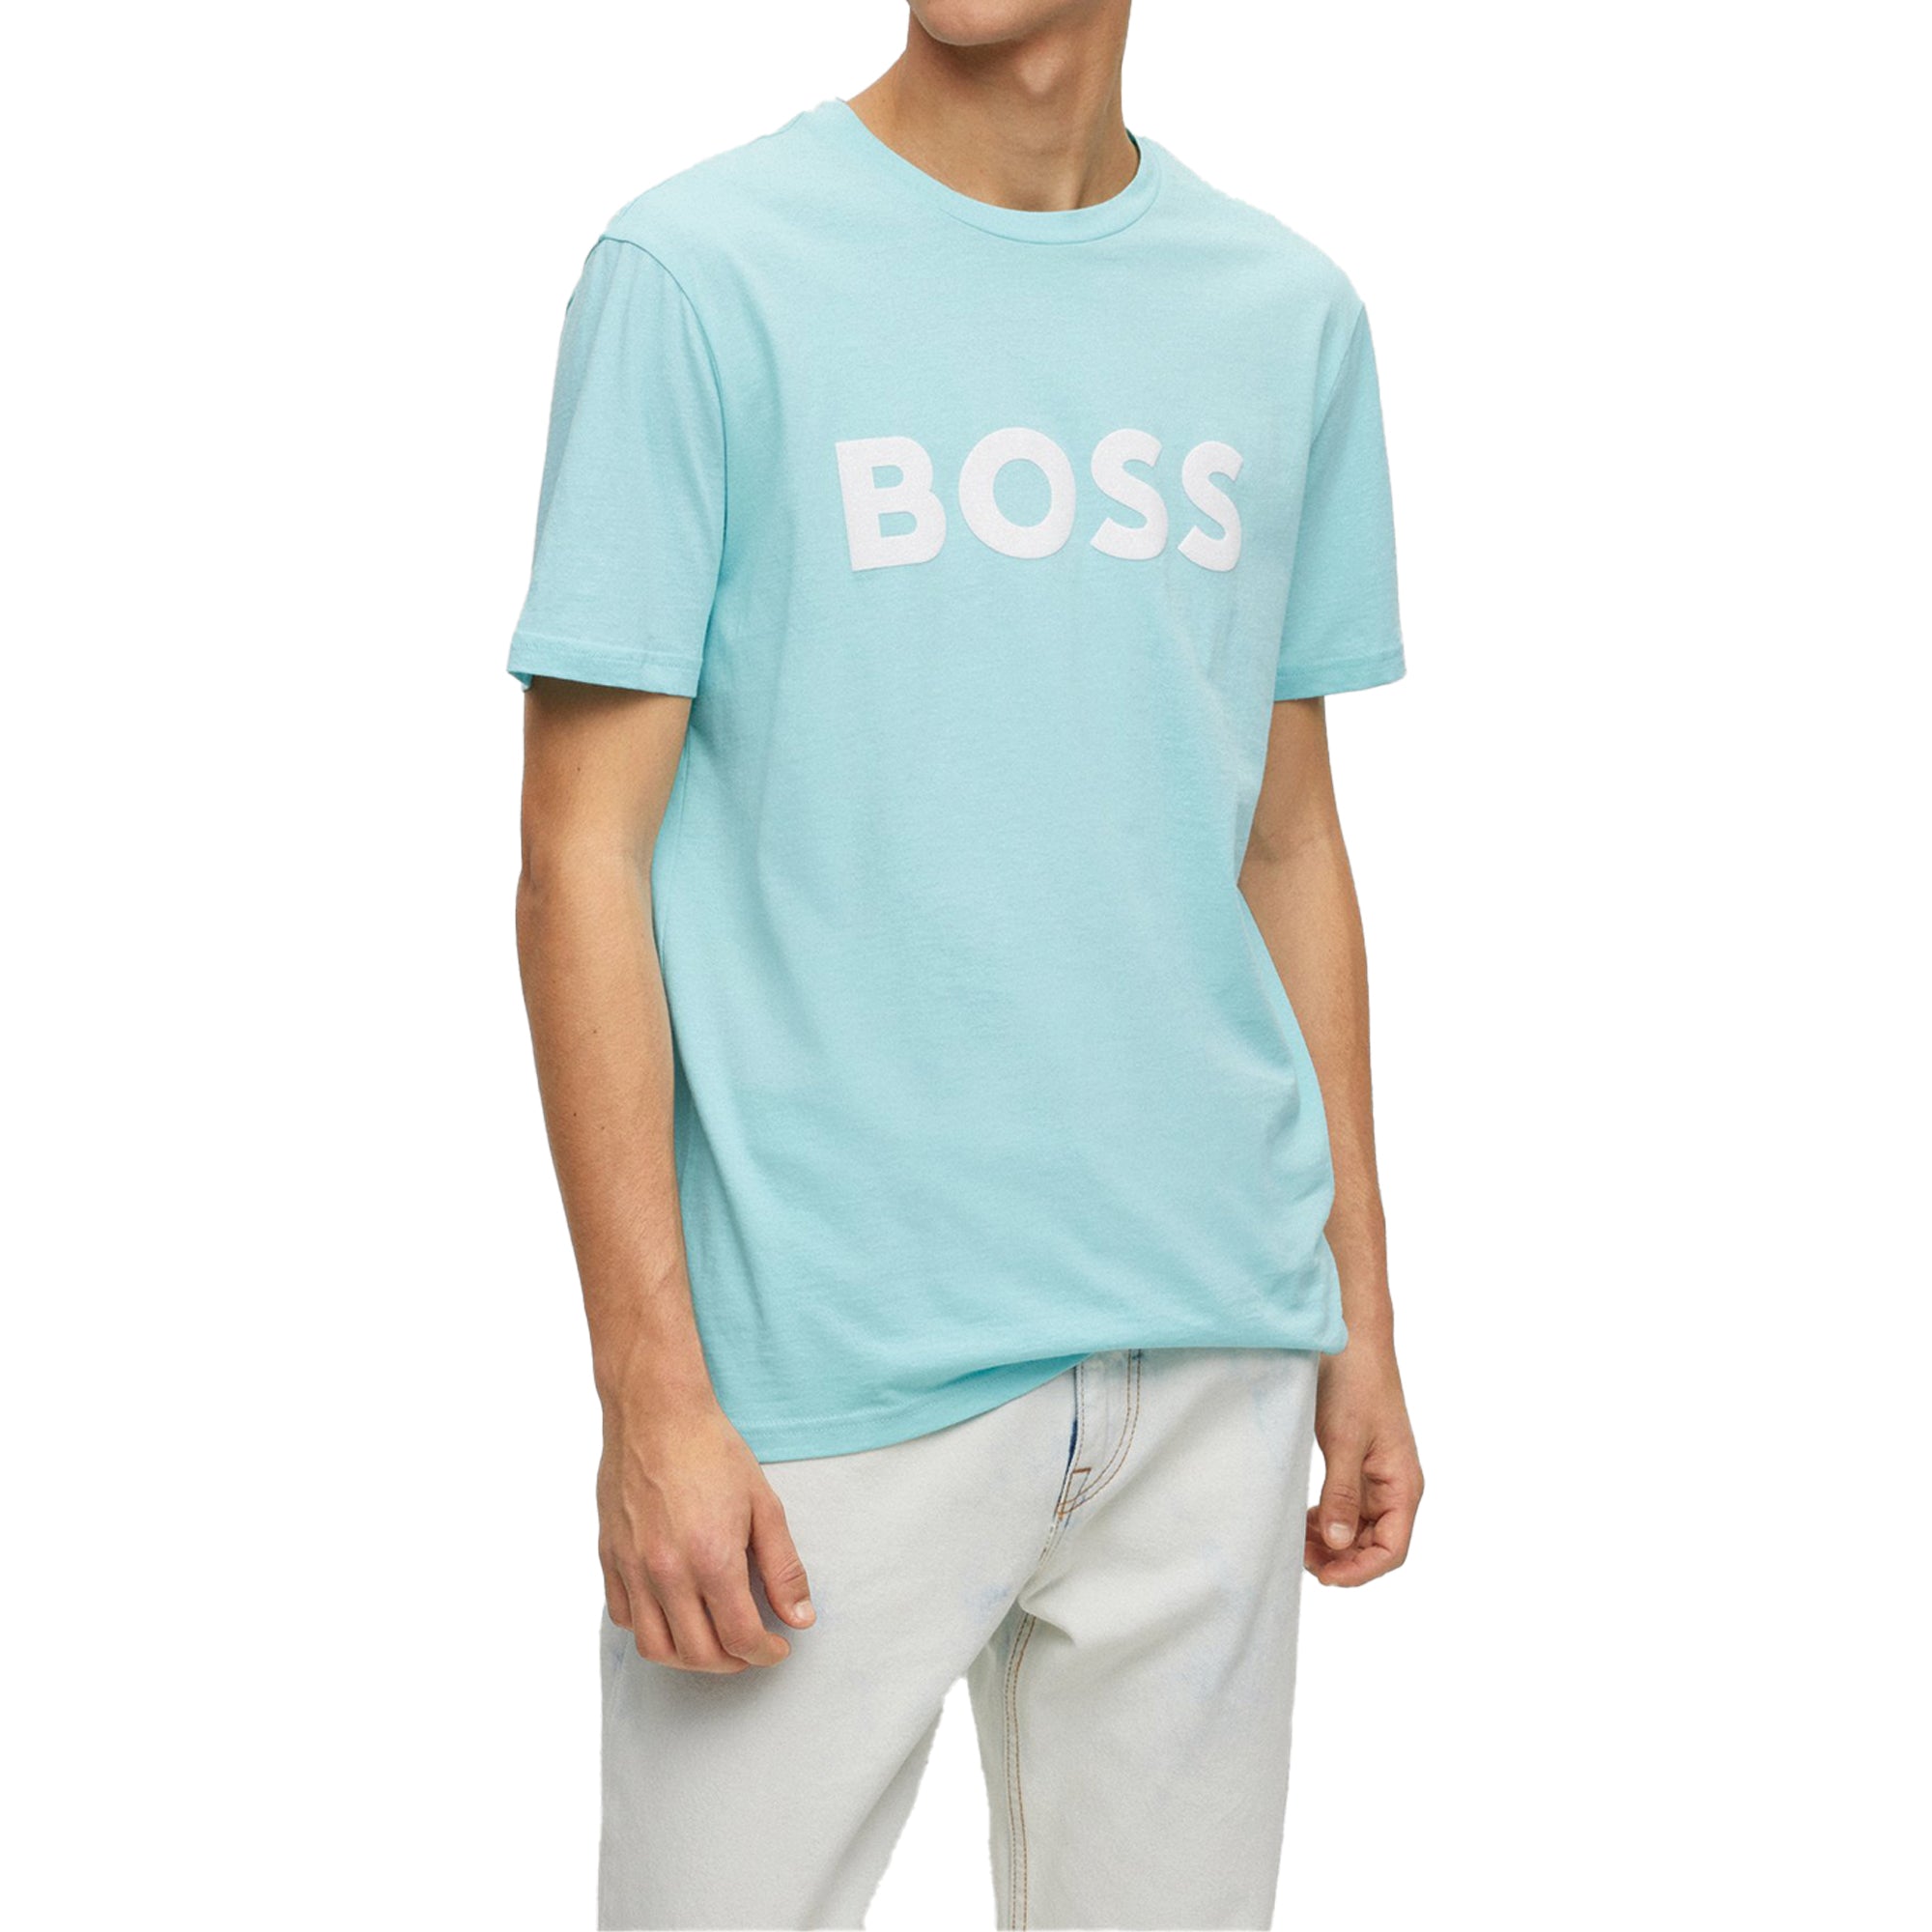 Boss Thinking 1 Logo T-Shirt - Prismarine